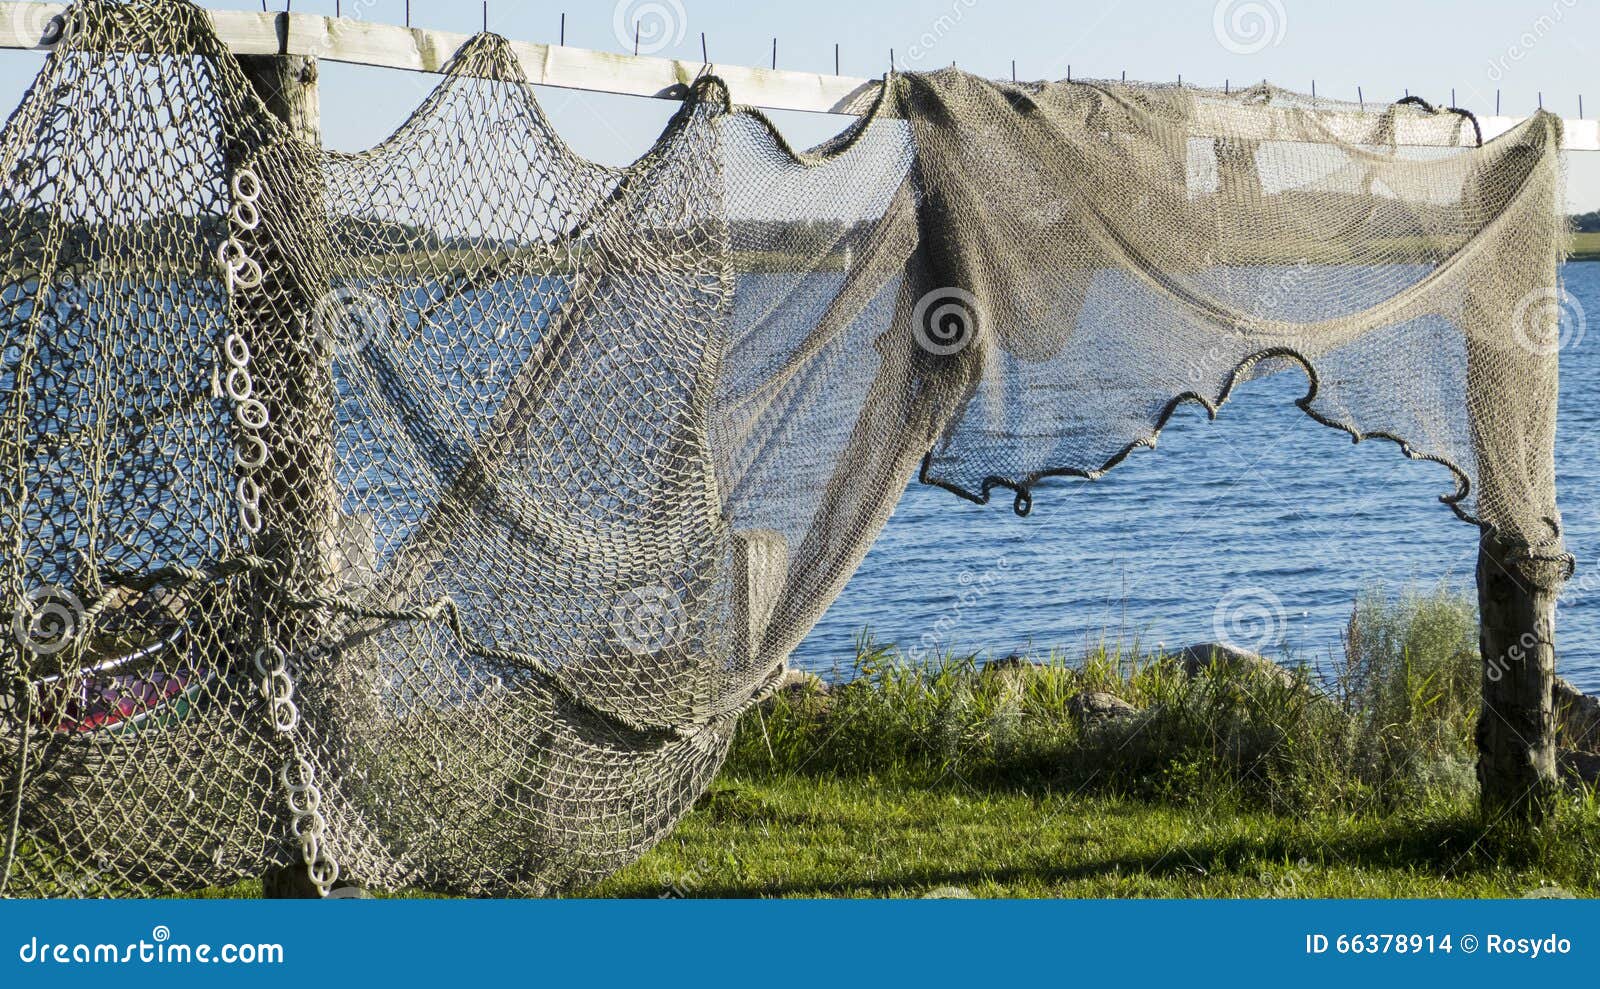 https://thumbs.dreamstime.com/z/fishing-nets-fish-traps-drying-wooden-rack-66378914.jpg